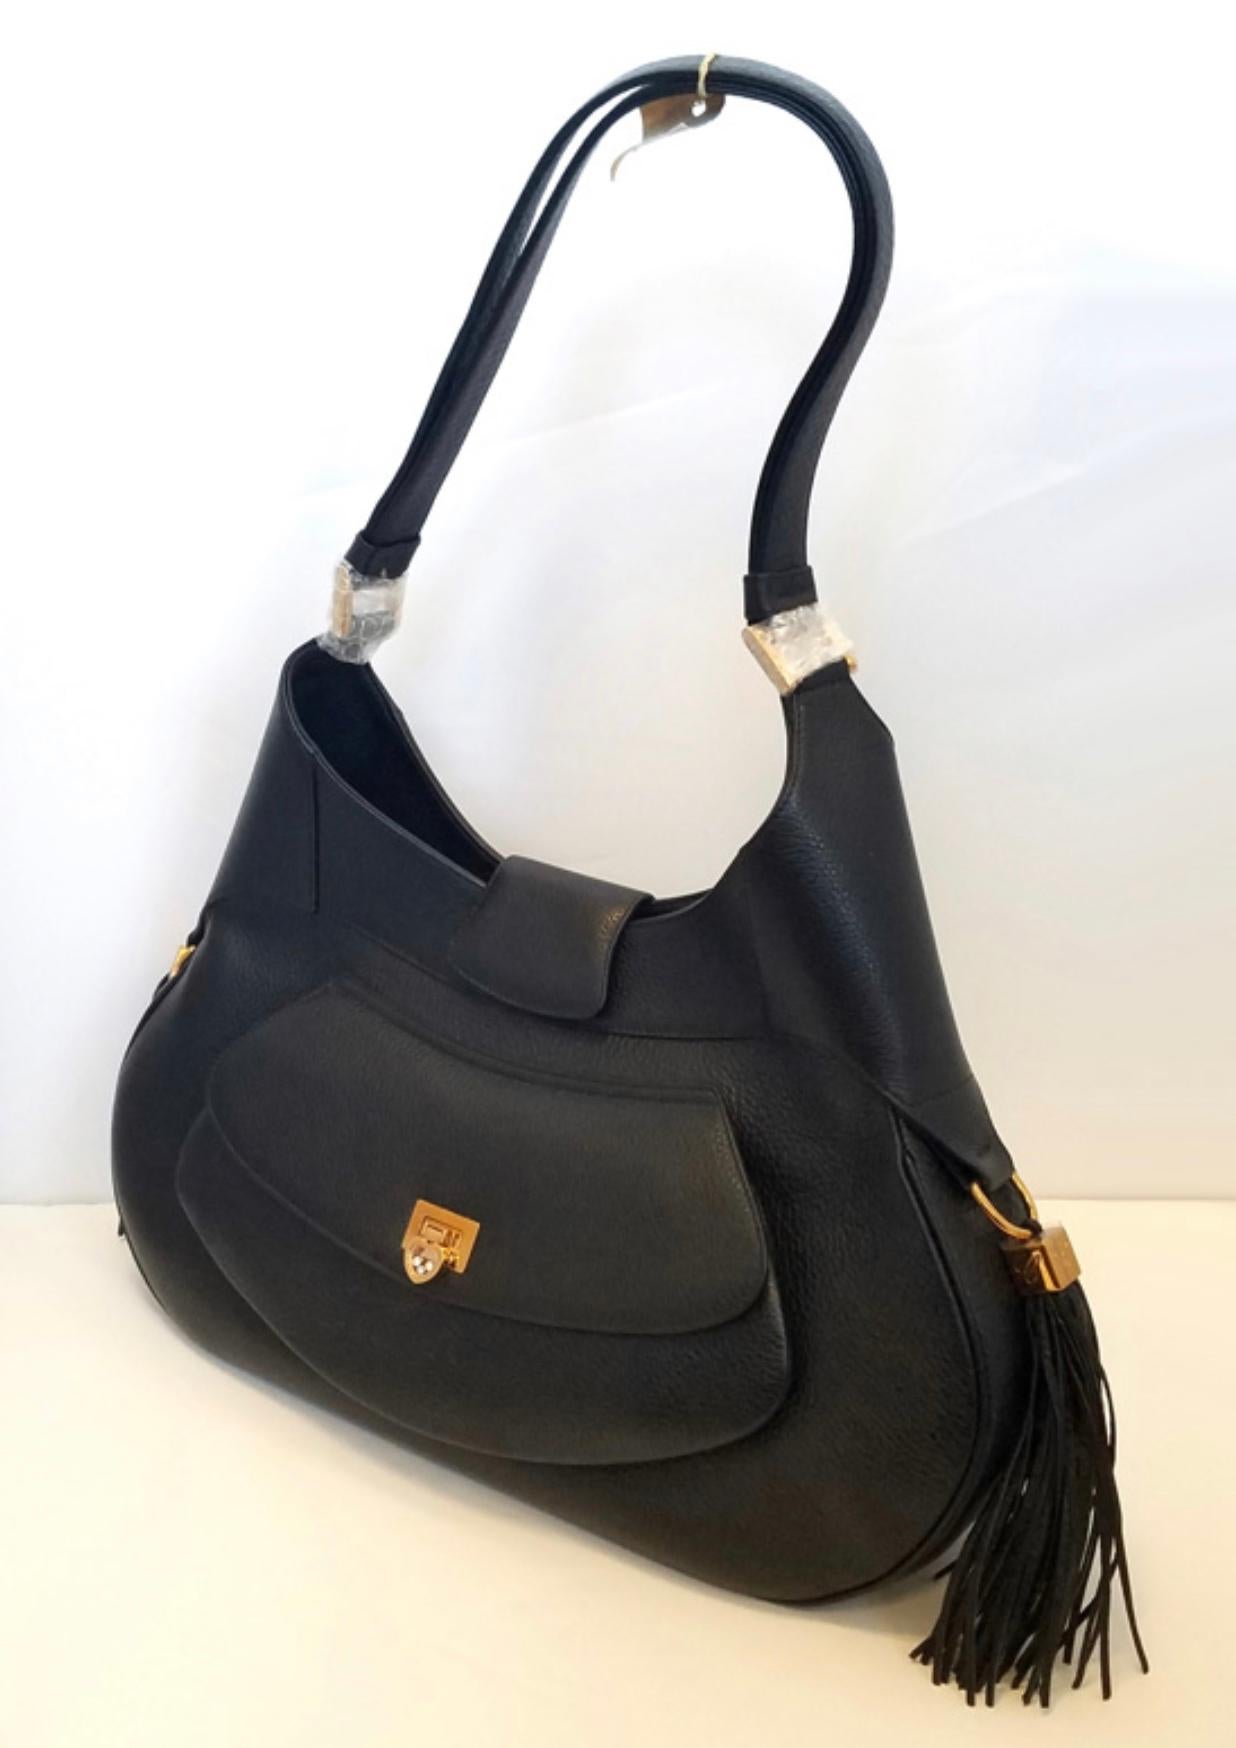 Women's Chopard Madrid Black Calfskin Leather Handbag, Brand New